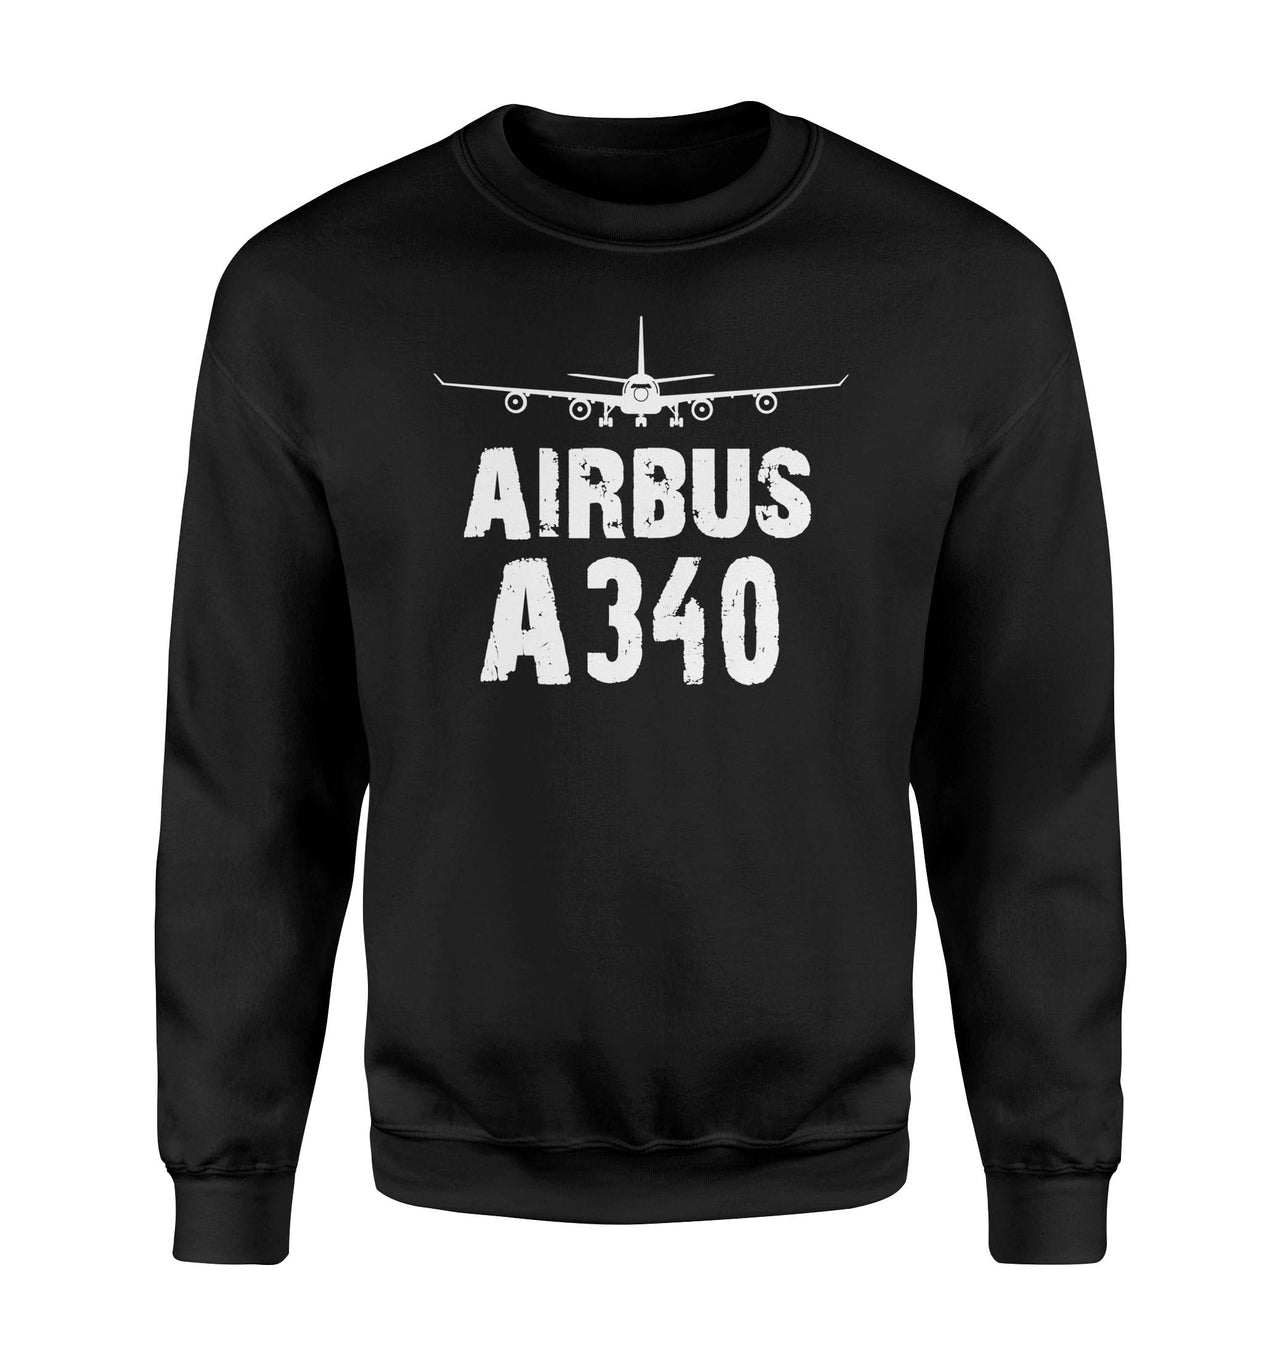 Airbus A340 & Plane Designed Sweatshirts